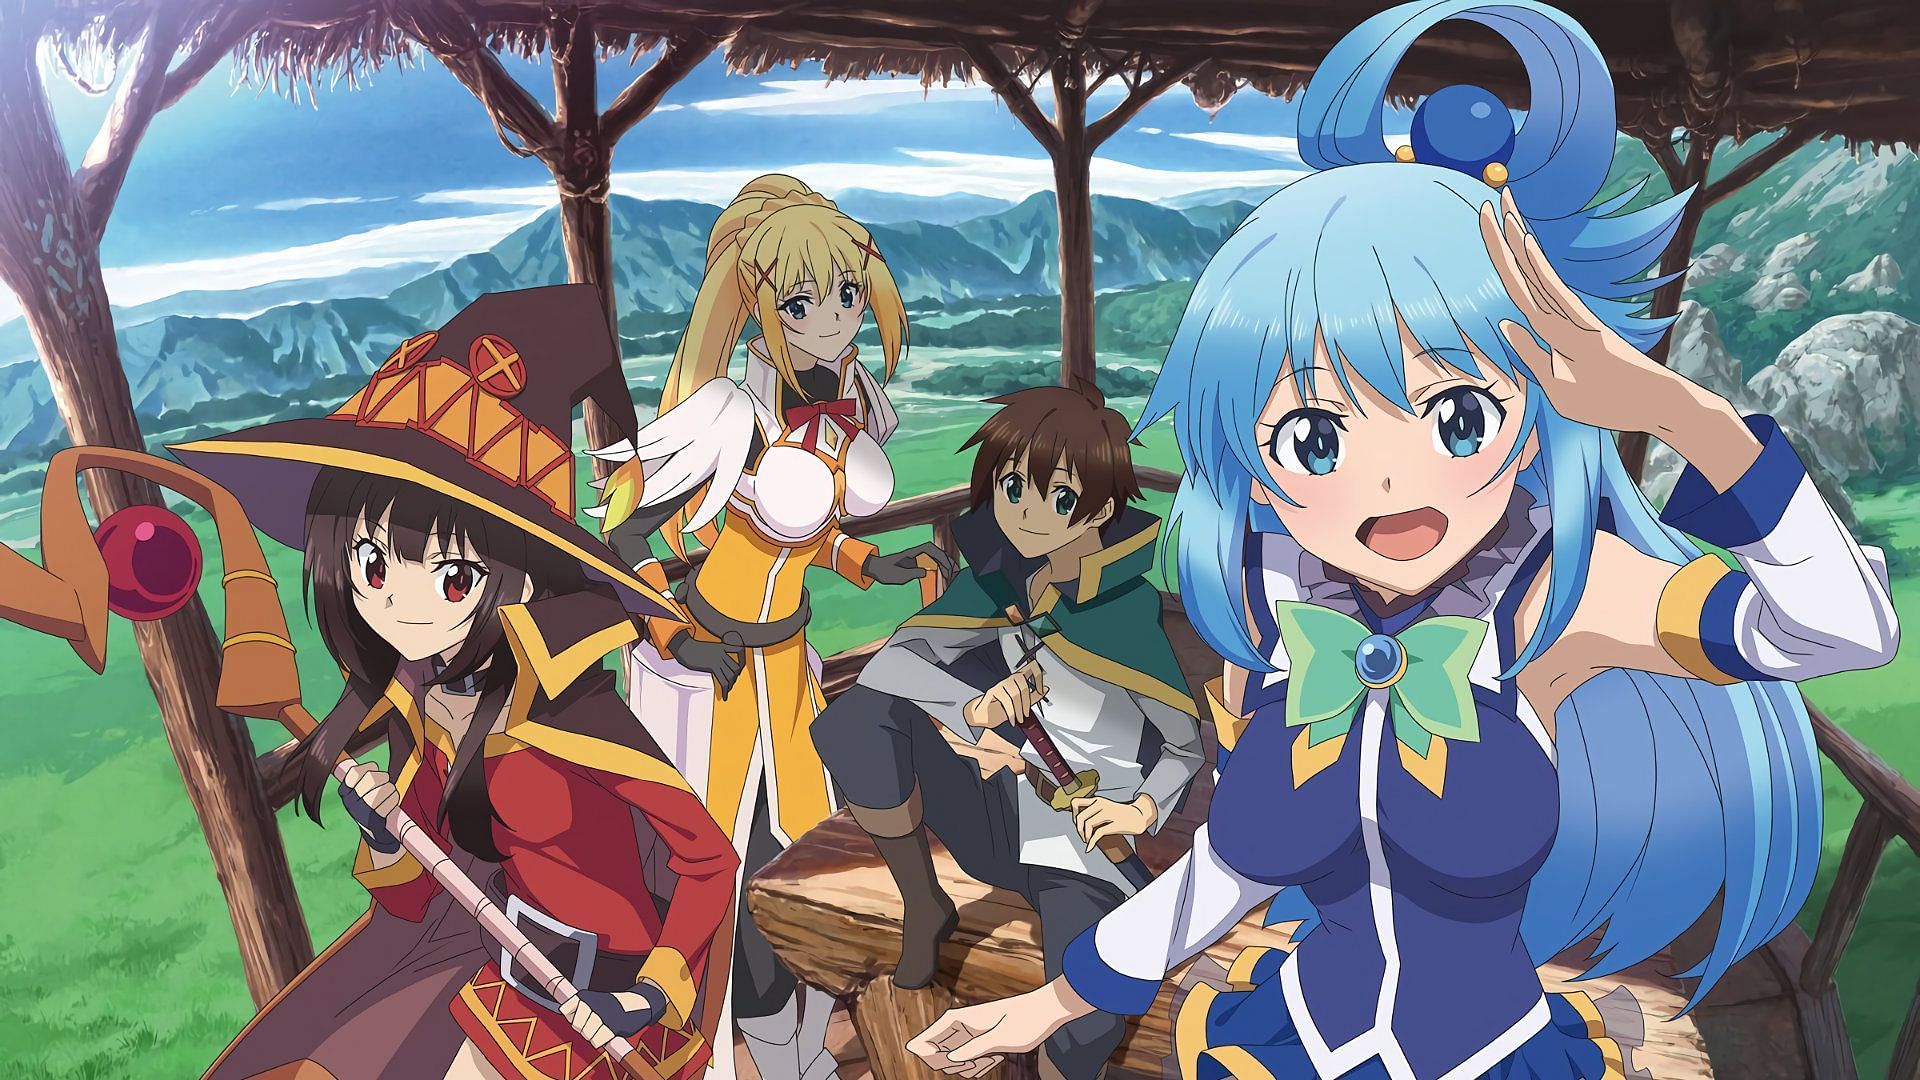 From left to right - Megumin, Darkness, Kazuma, and Aqua, the protagonists of Konosuba. (Image via Studio Deen)